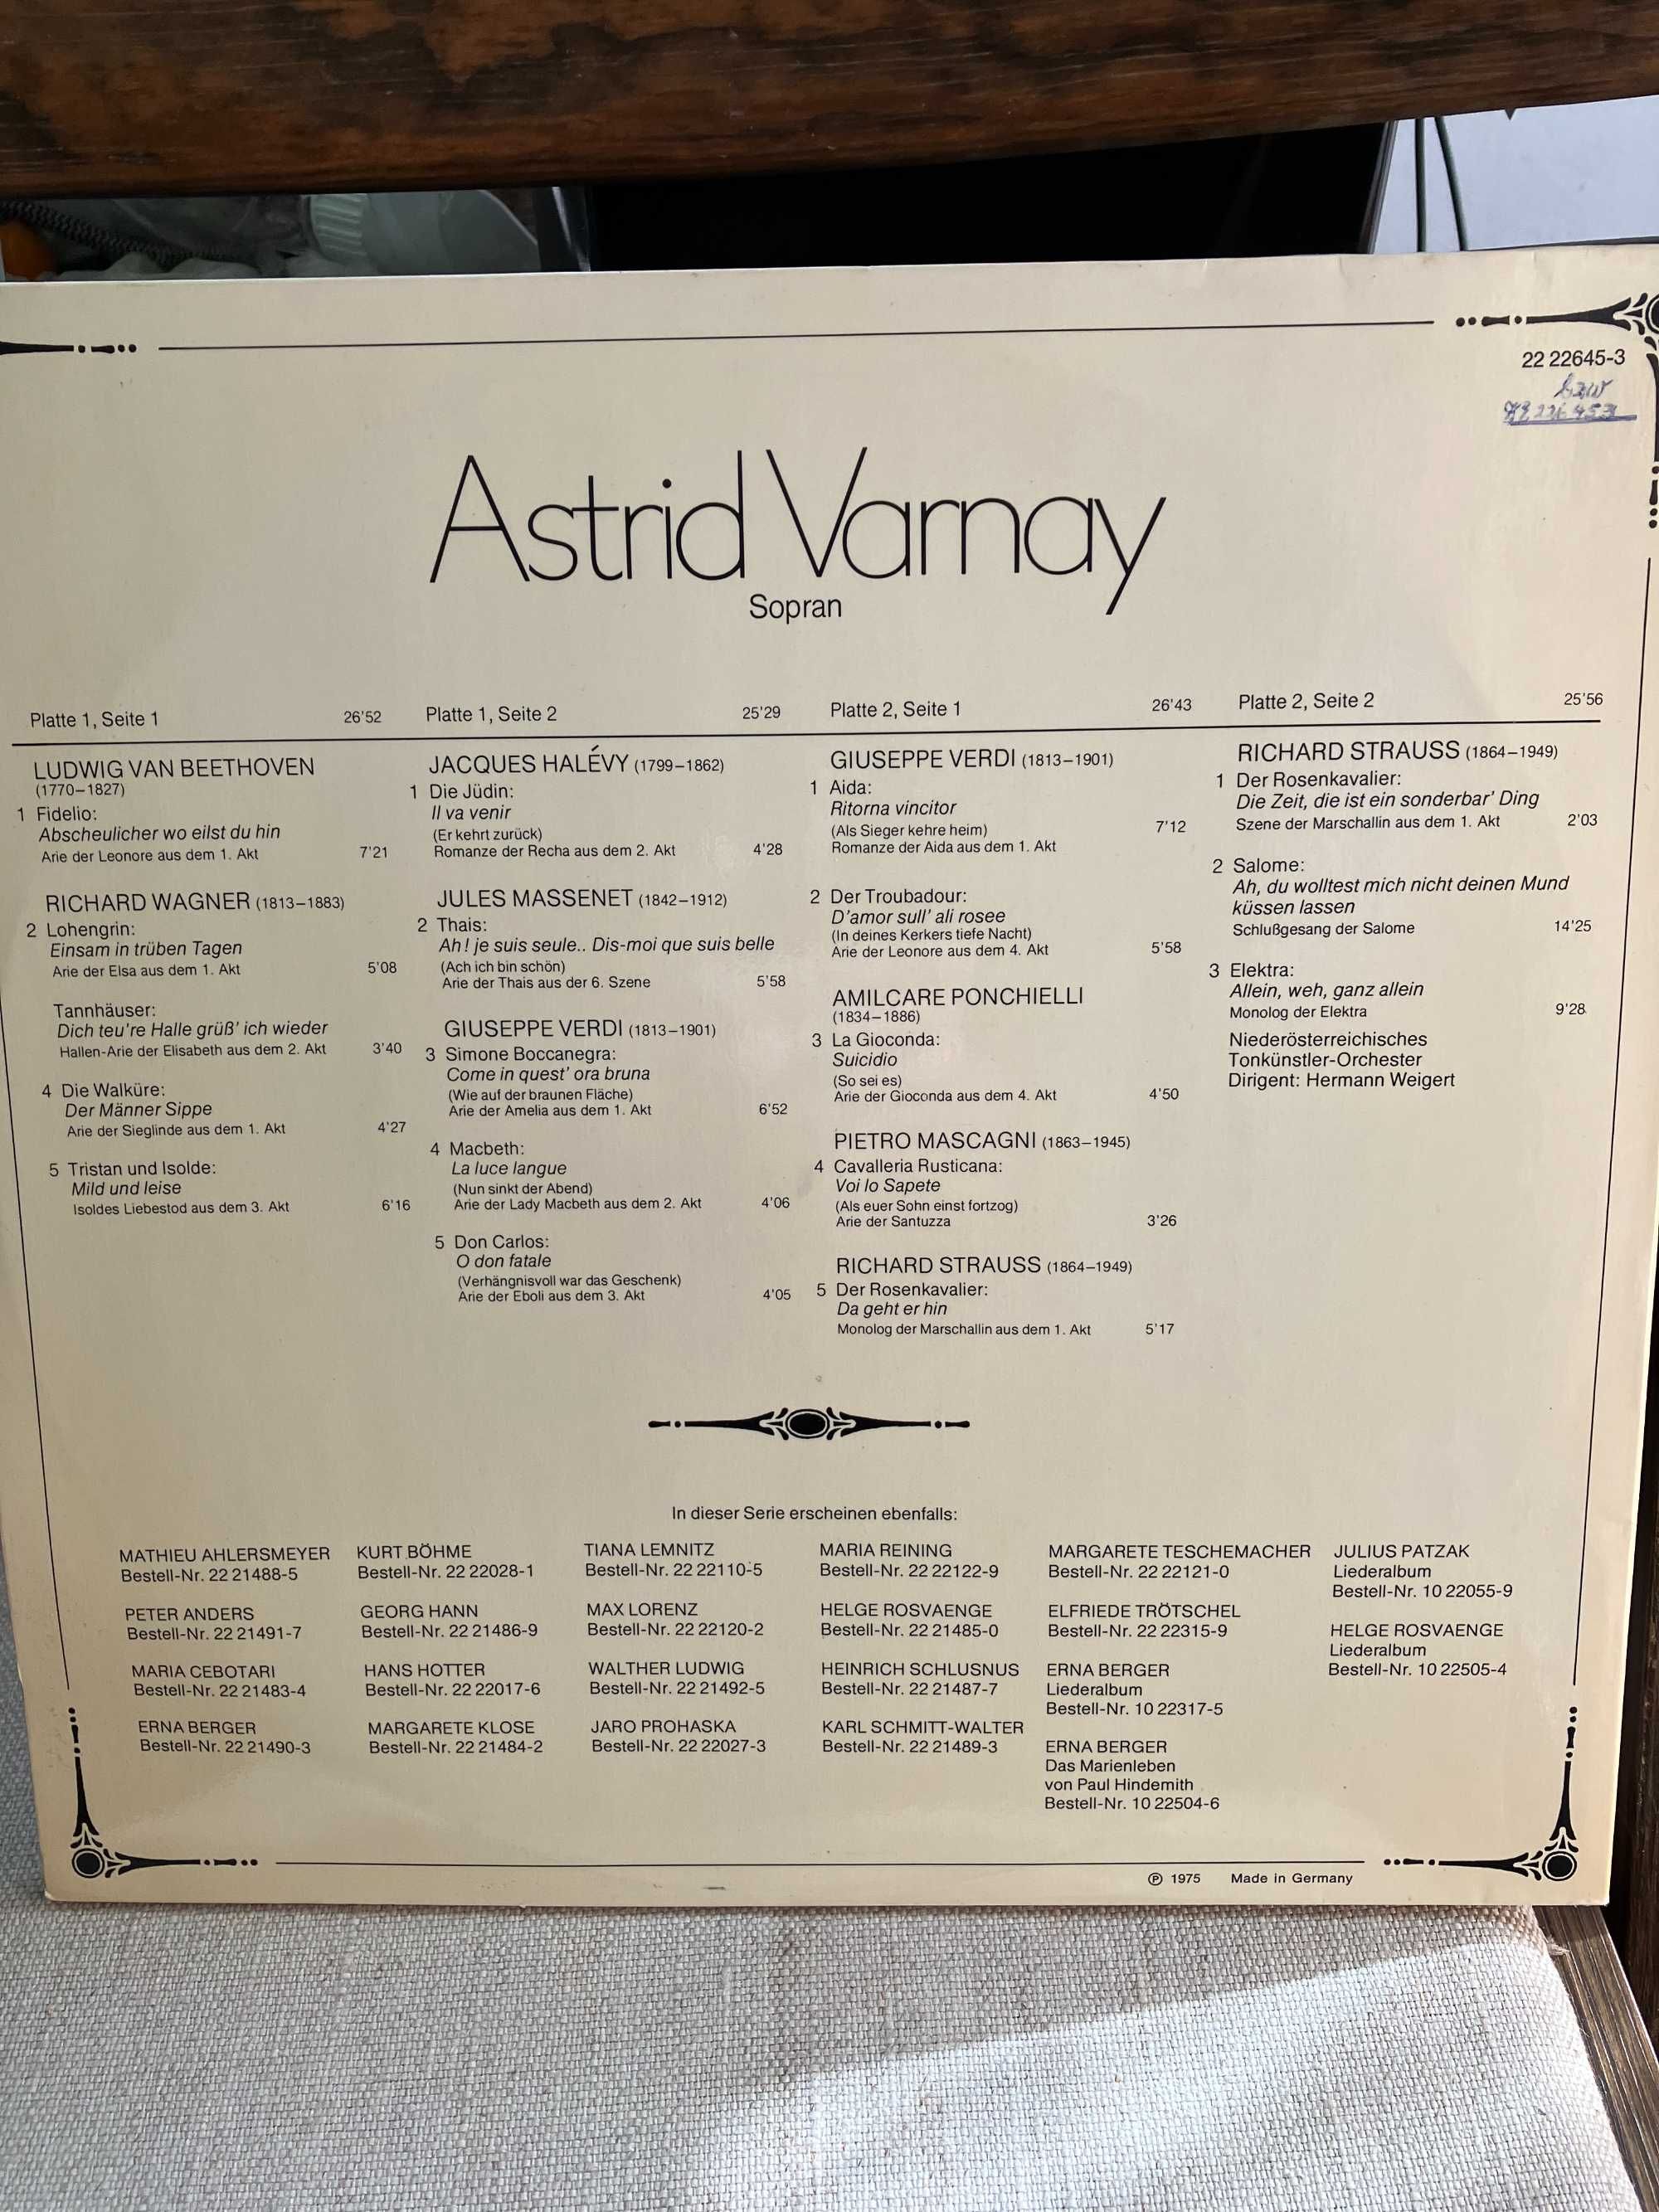 winyl  / album  Astrid Varnay  sopran      mint